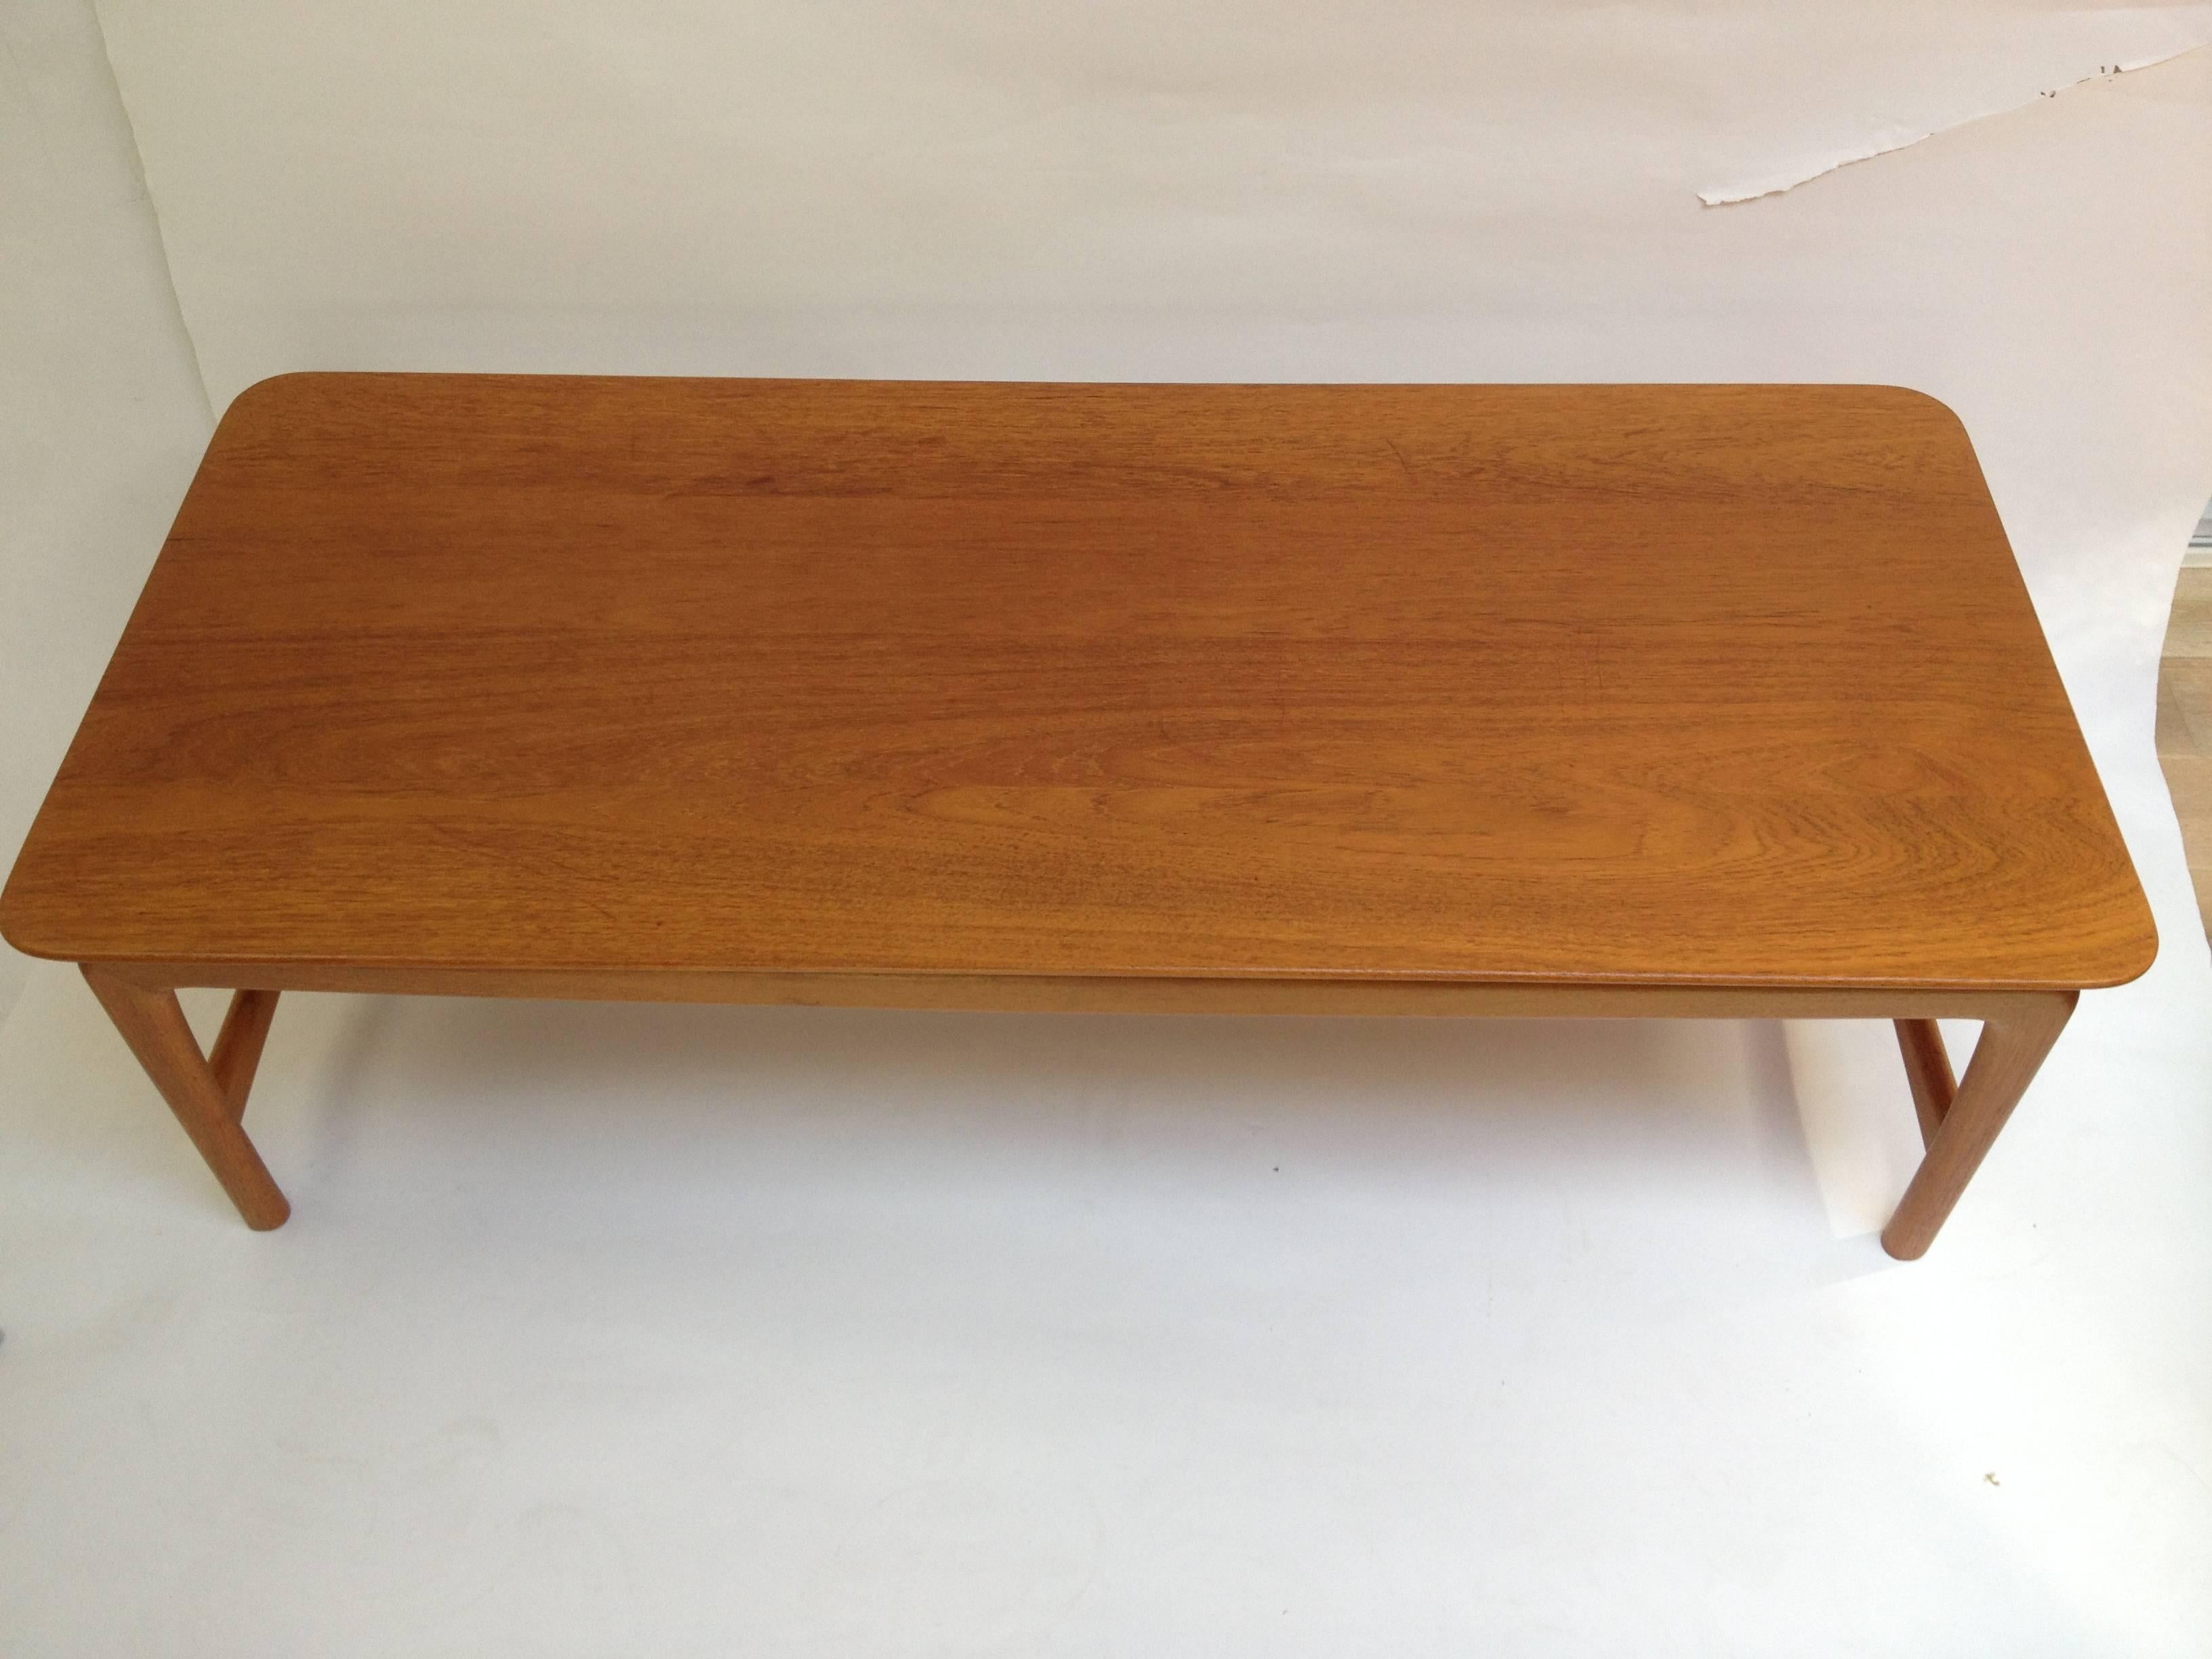 1950s Teak Coffee Table Designed by Peter Hvidt for France & Daverkosen For Sale 2